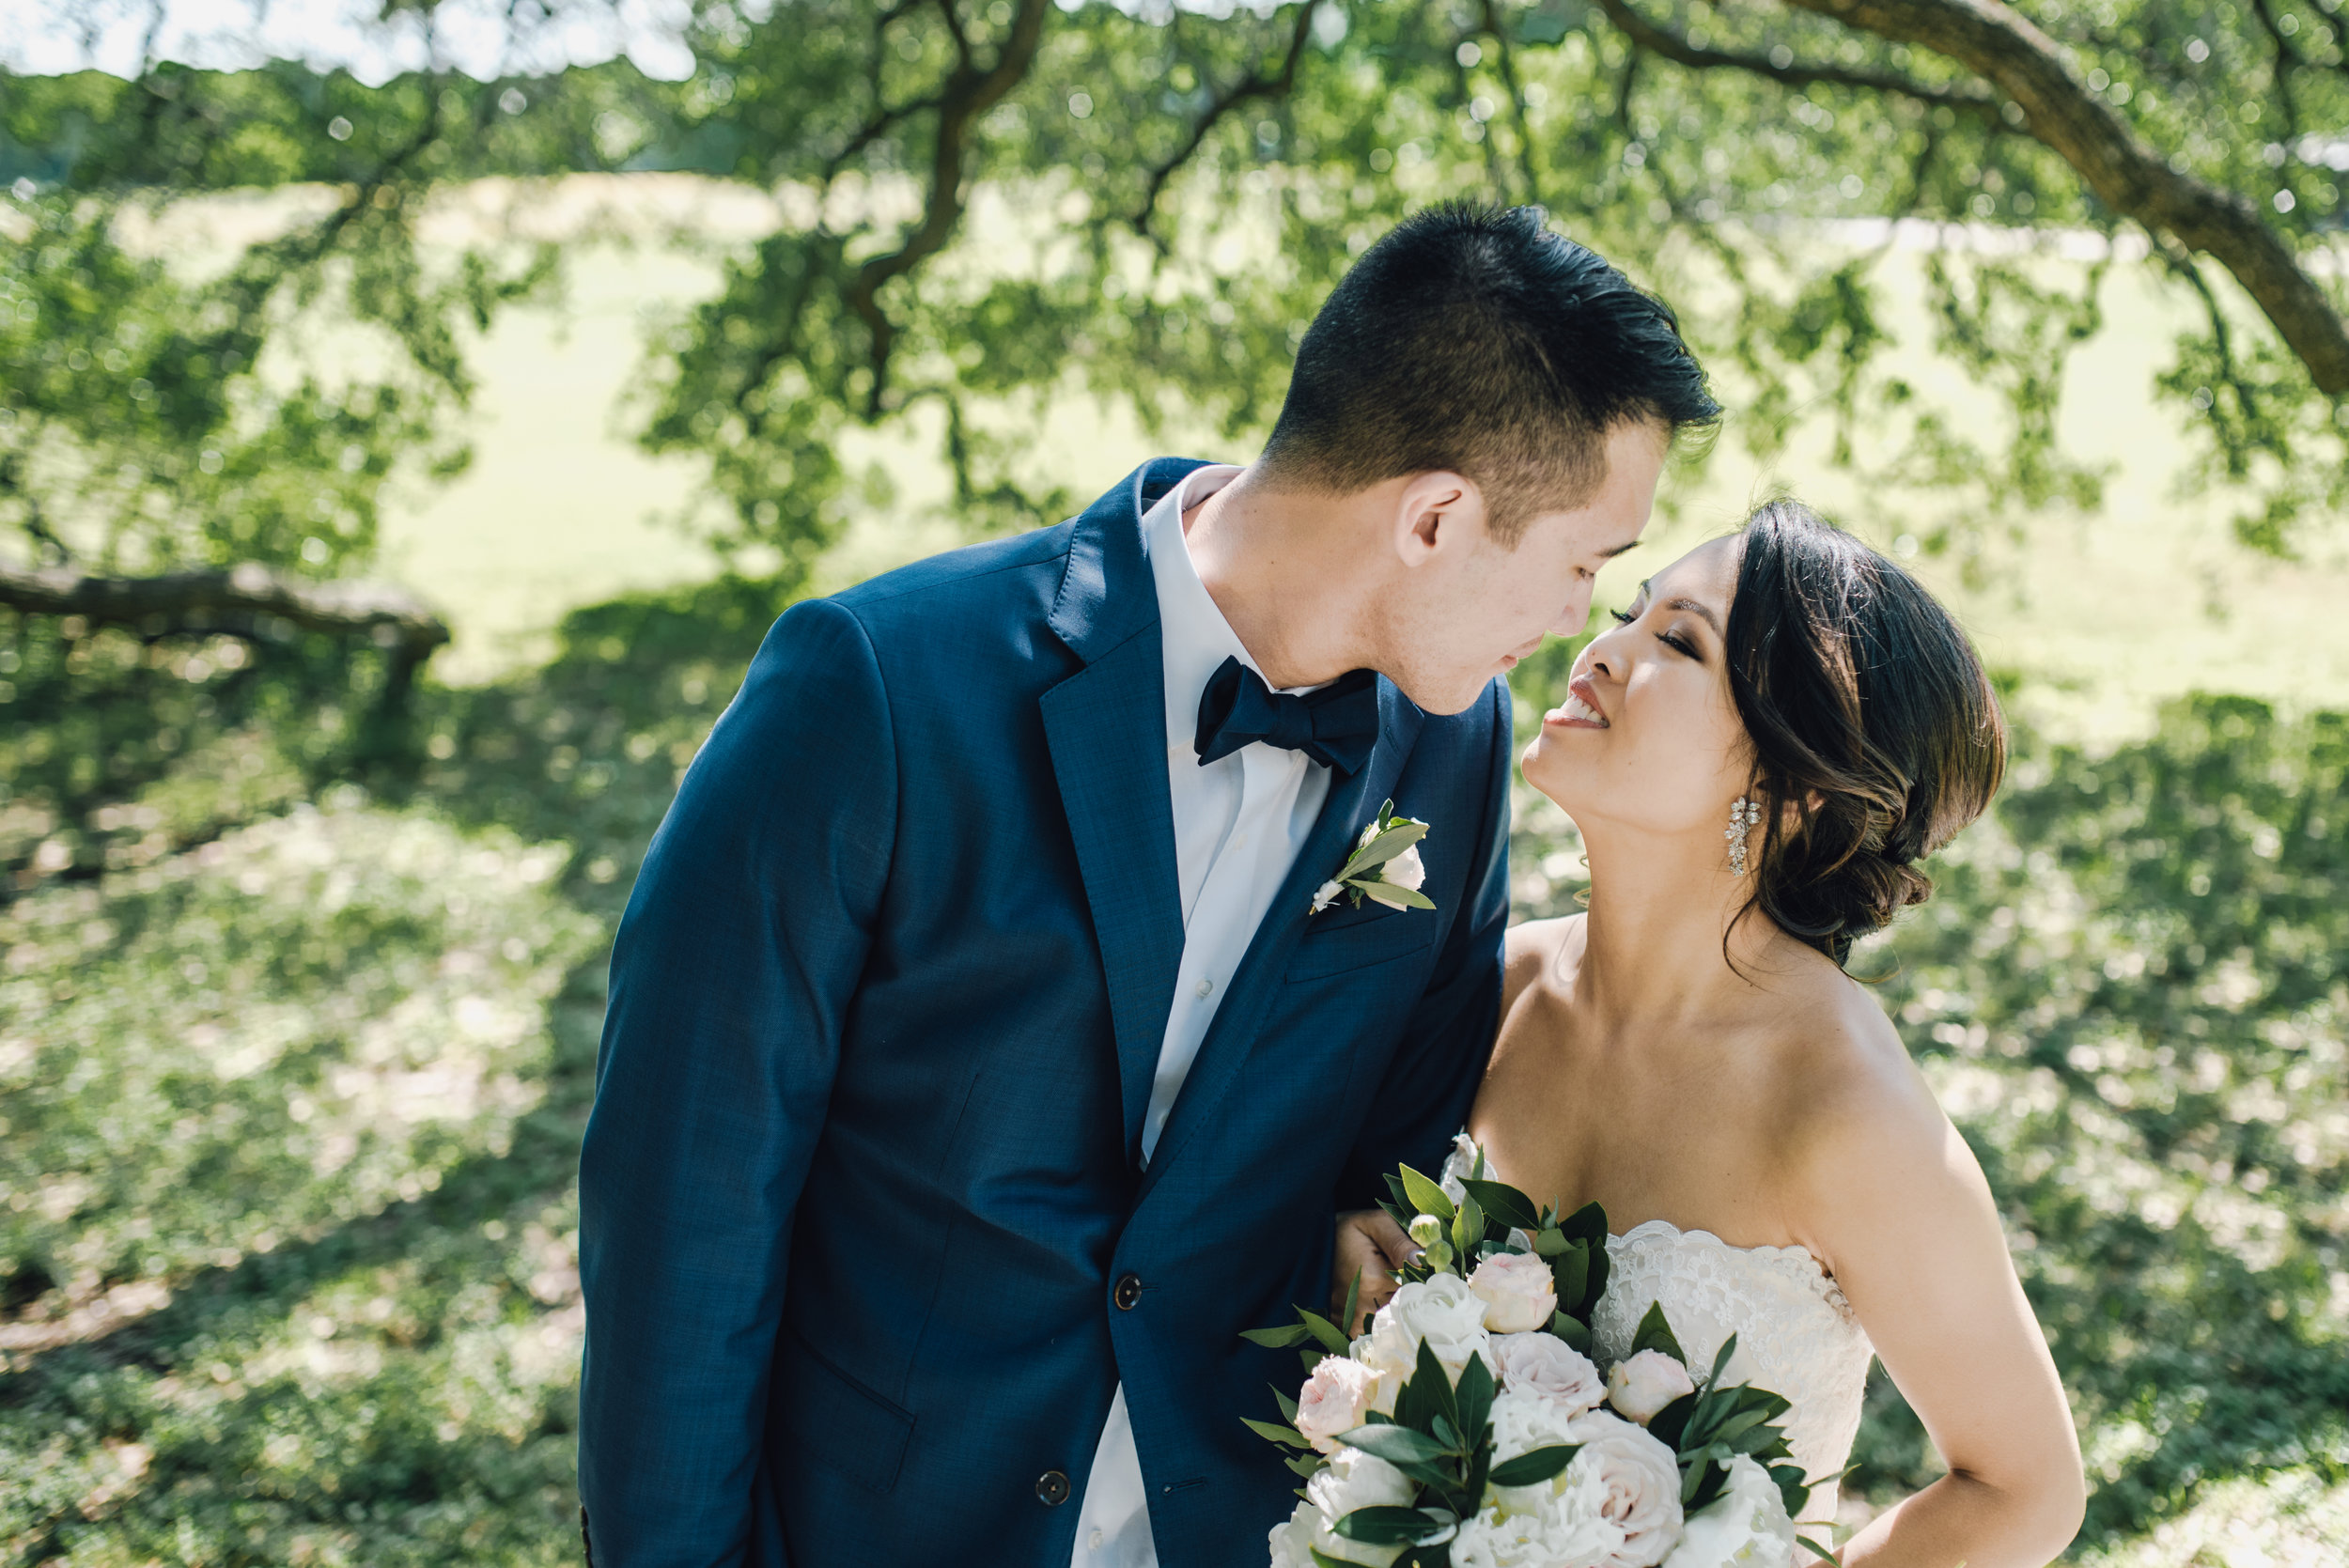 Main and Simple Photography_2018_Weddings_Austin_B+E-746.jpg